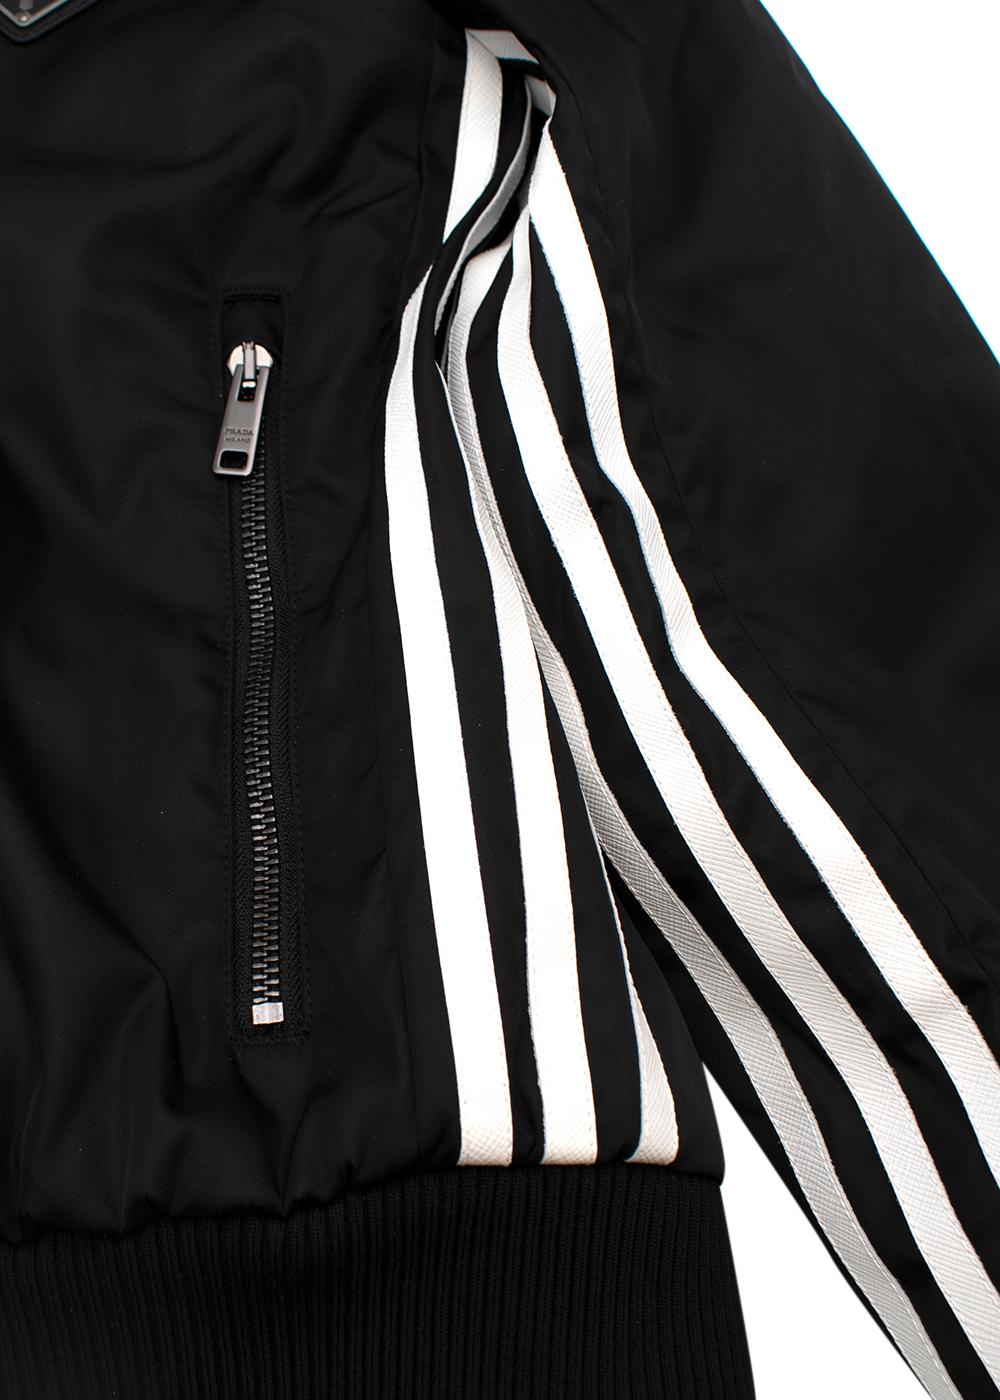 Prada x Adidas Re-Nylon Track Jacket & Joggers For Sale 2